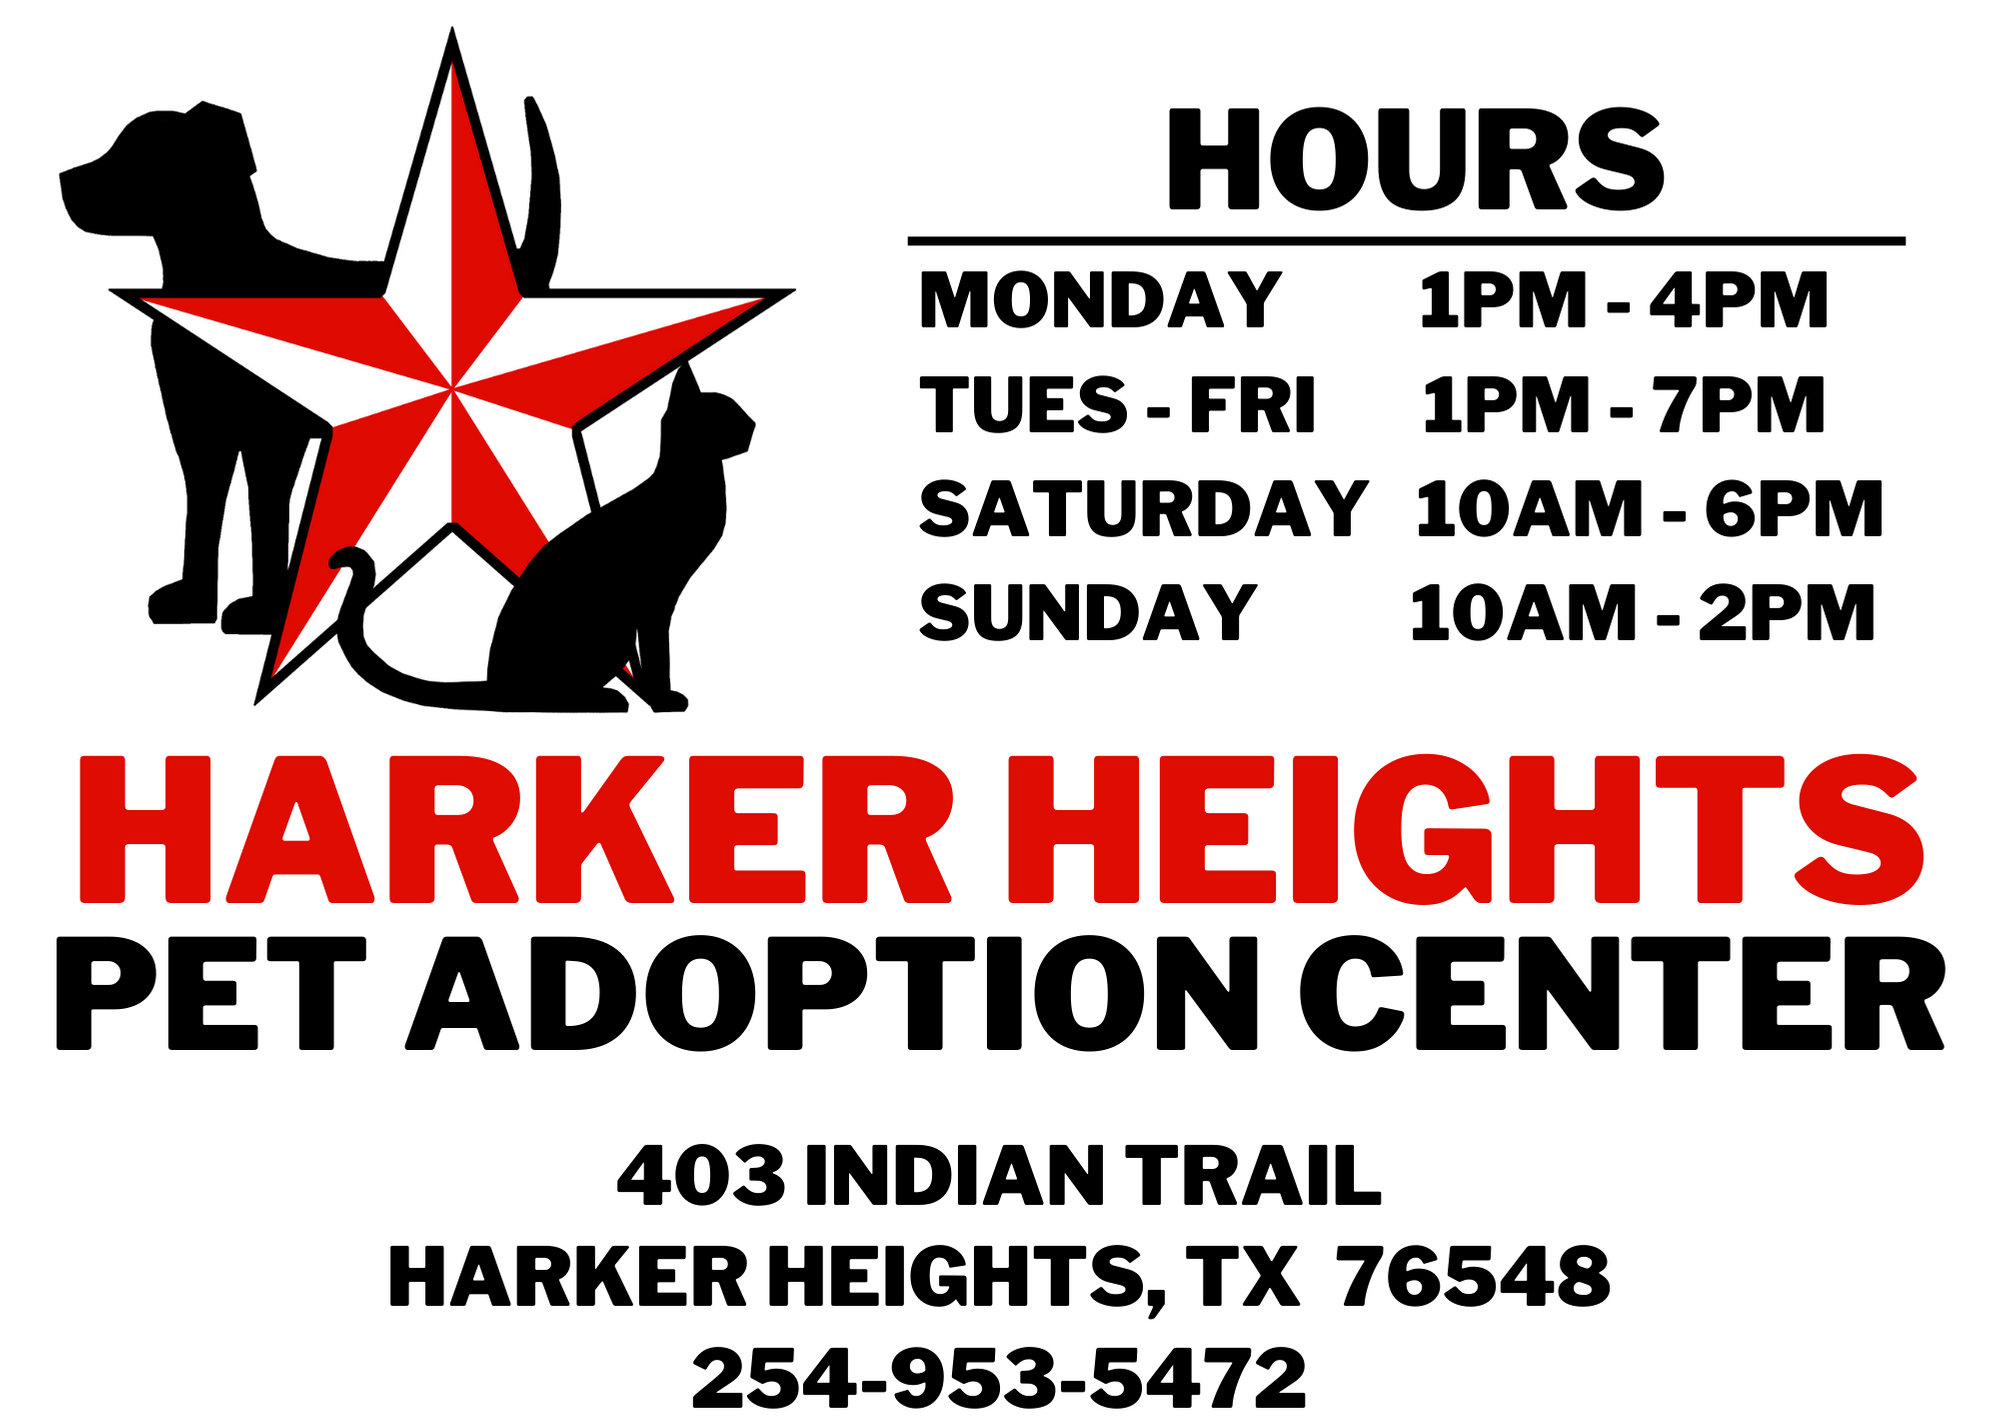 City of Harker Heights Pet Adoption Center